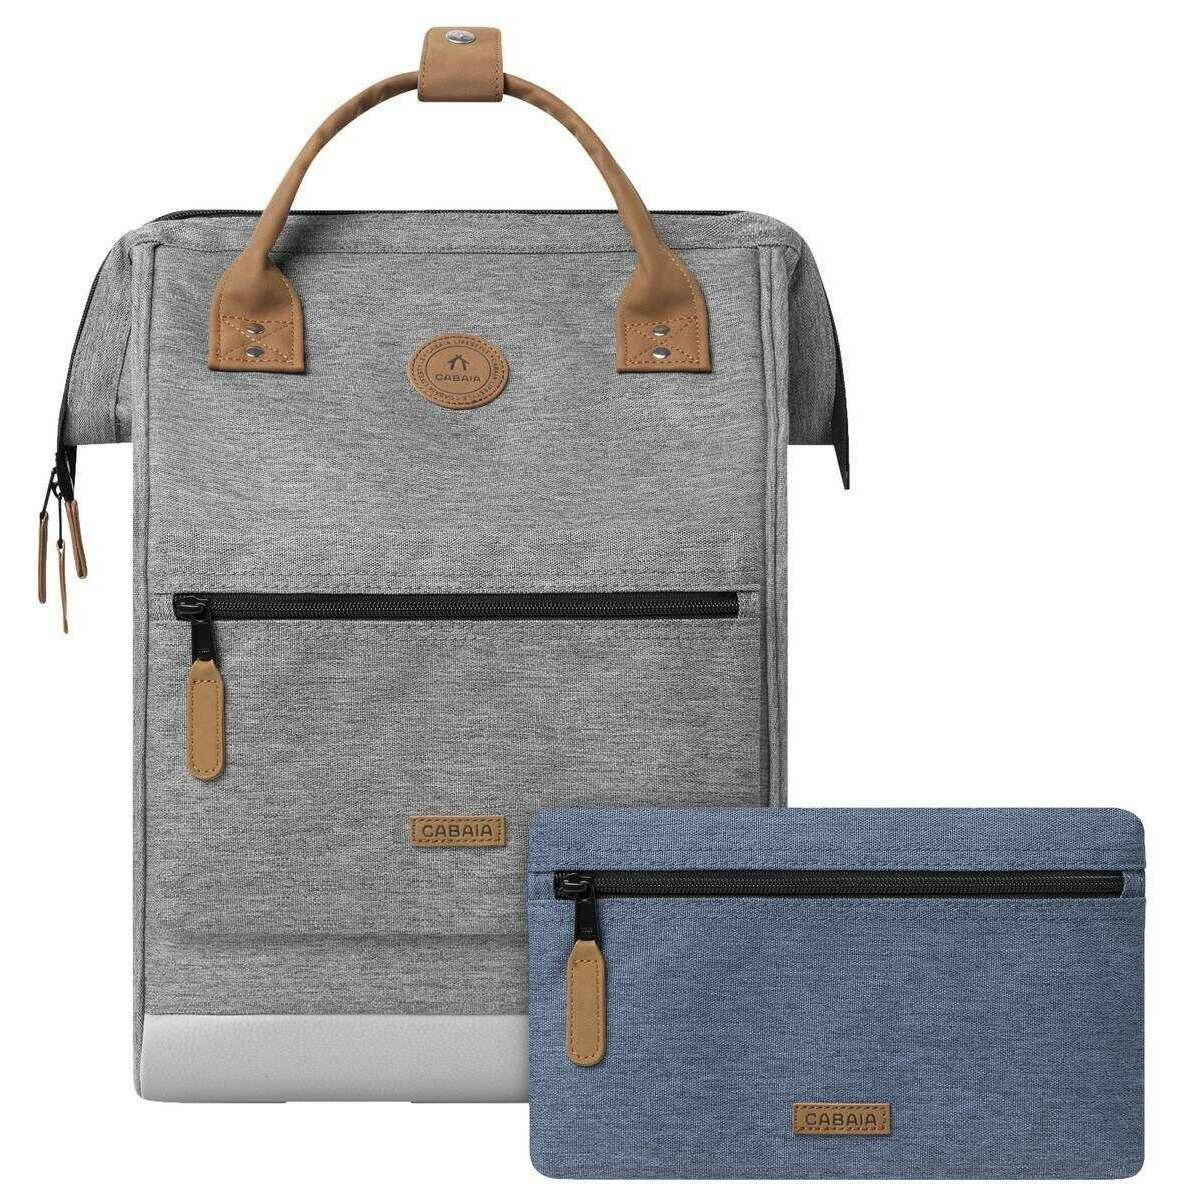 Cabaia Adventurer Melange Large Backpack - New York Grey